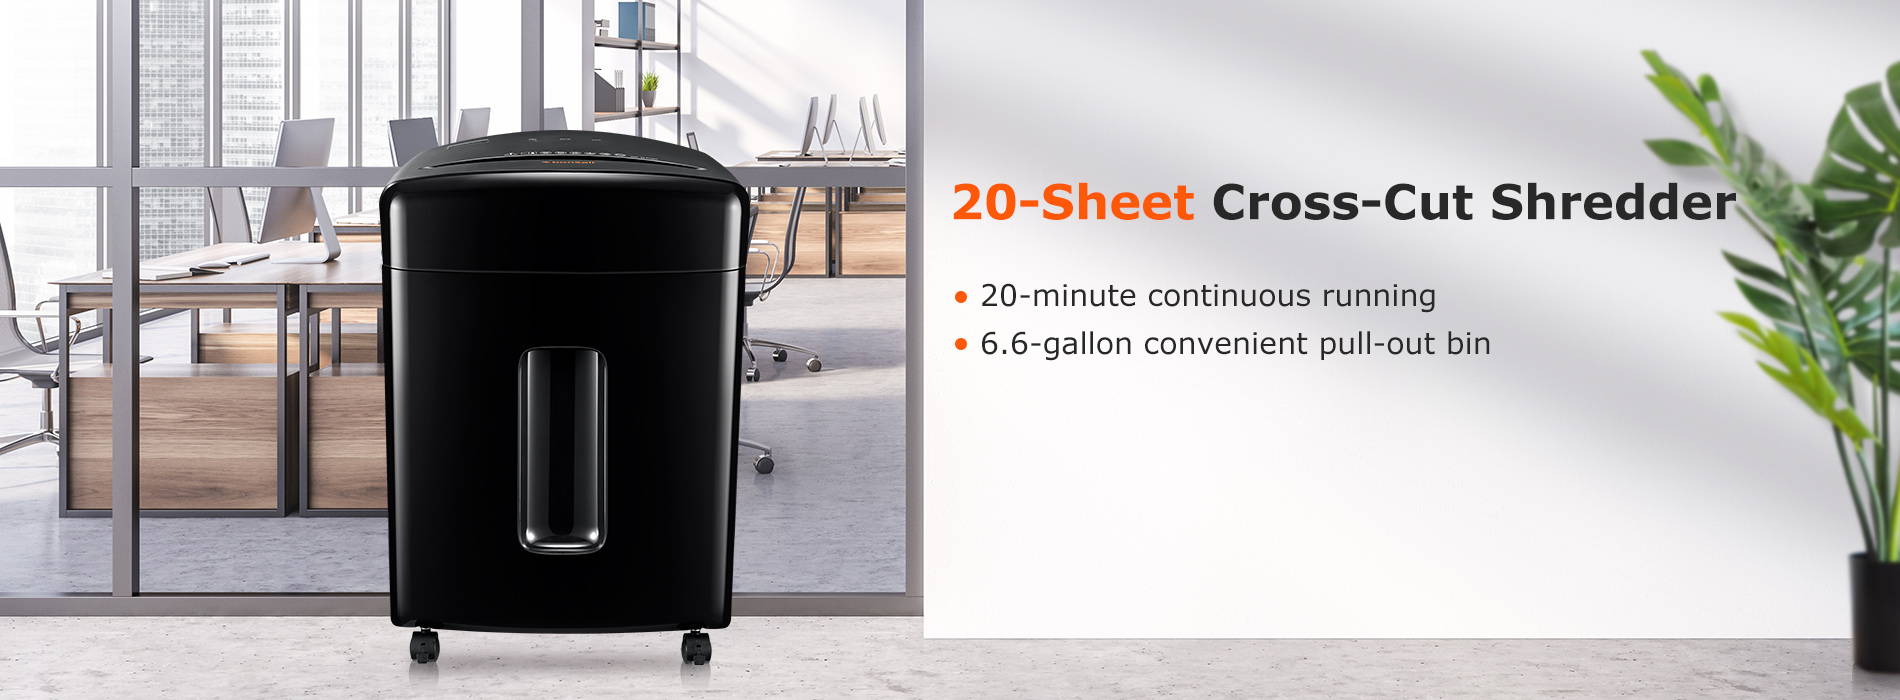 20-Sheet Cross-Cut Shredder- 20 minutes continuous running 6.6-gallon convenient pull-out bin